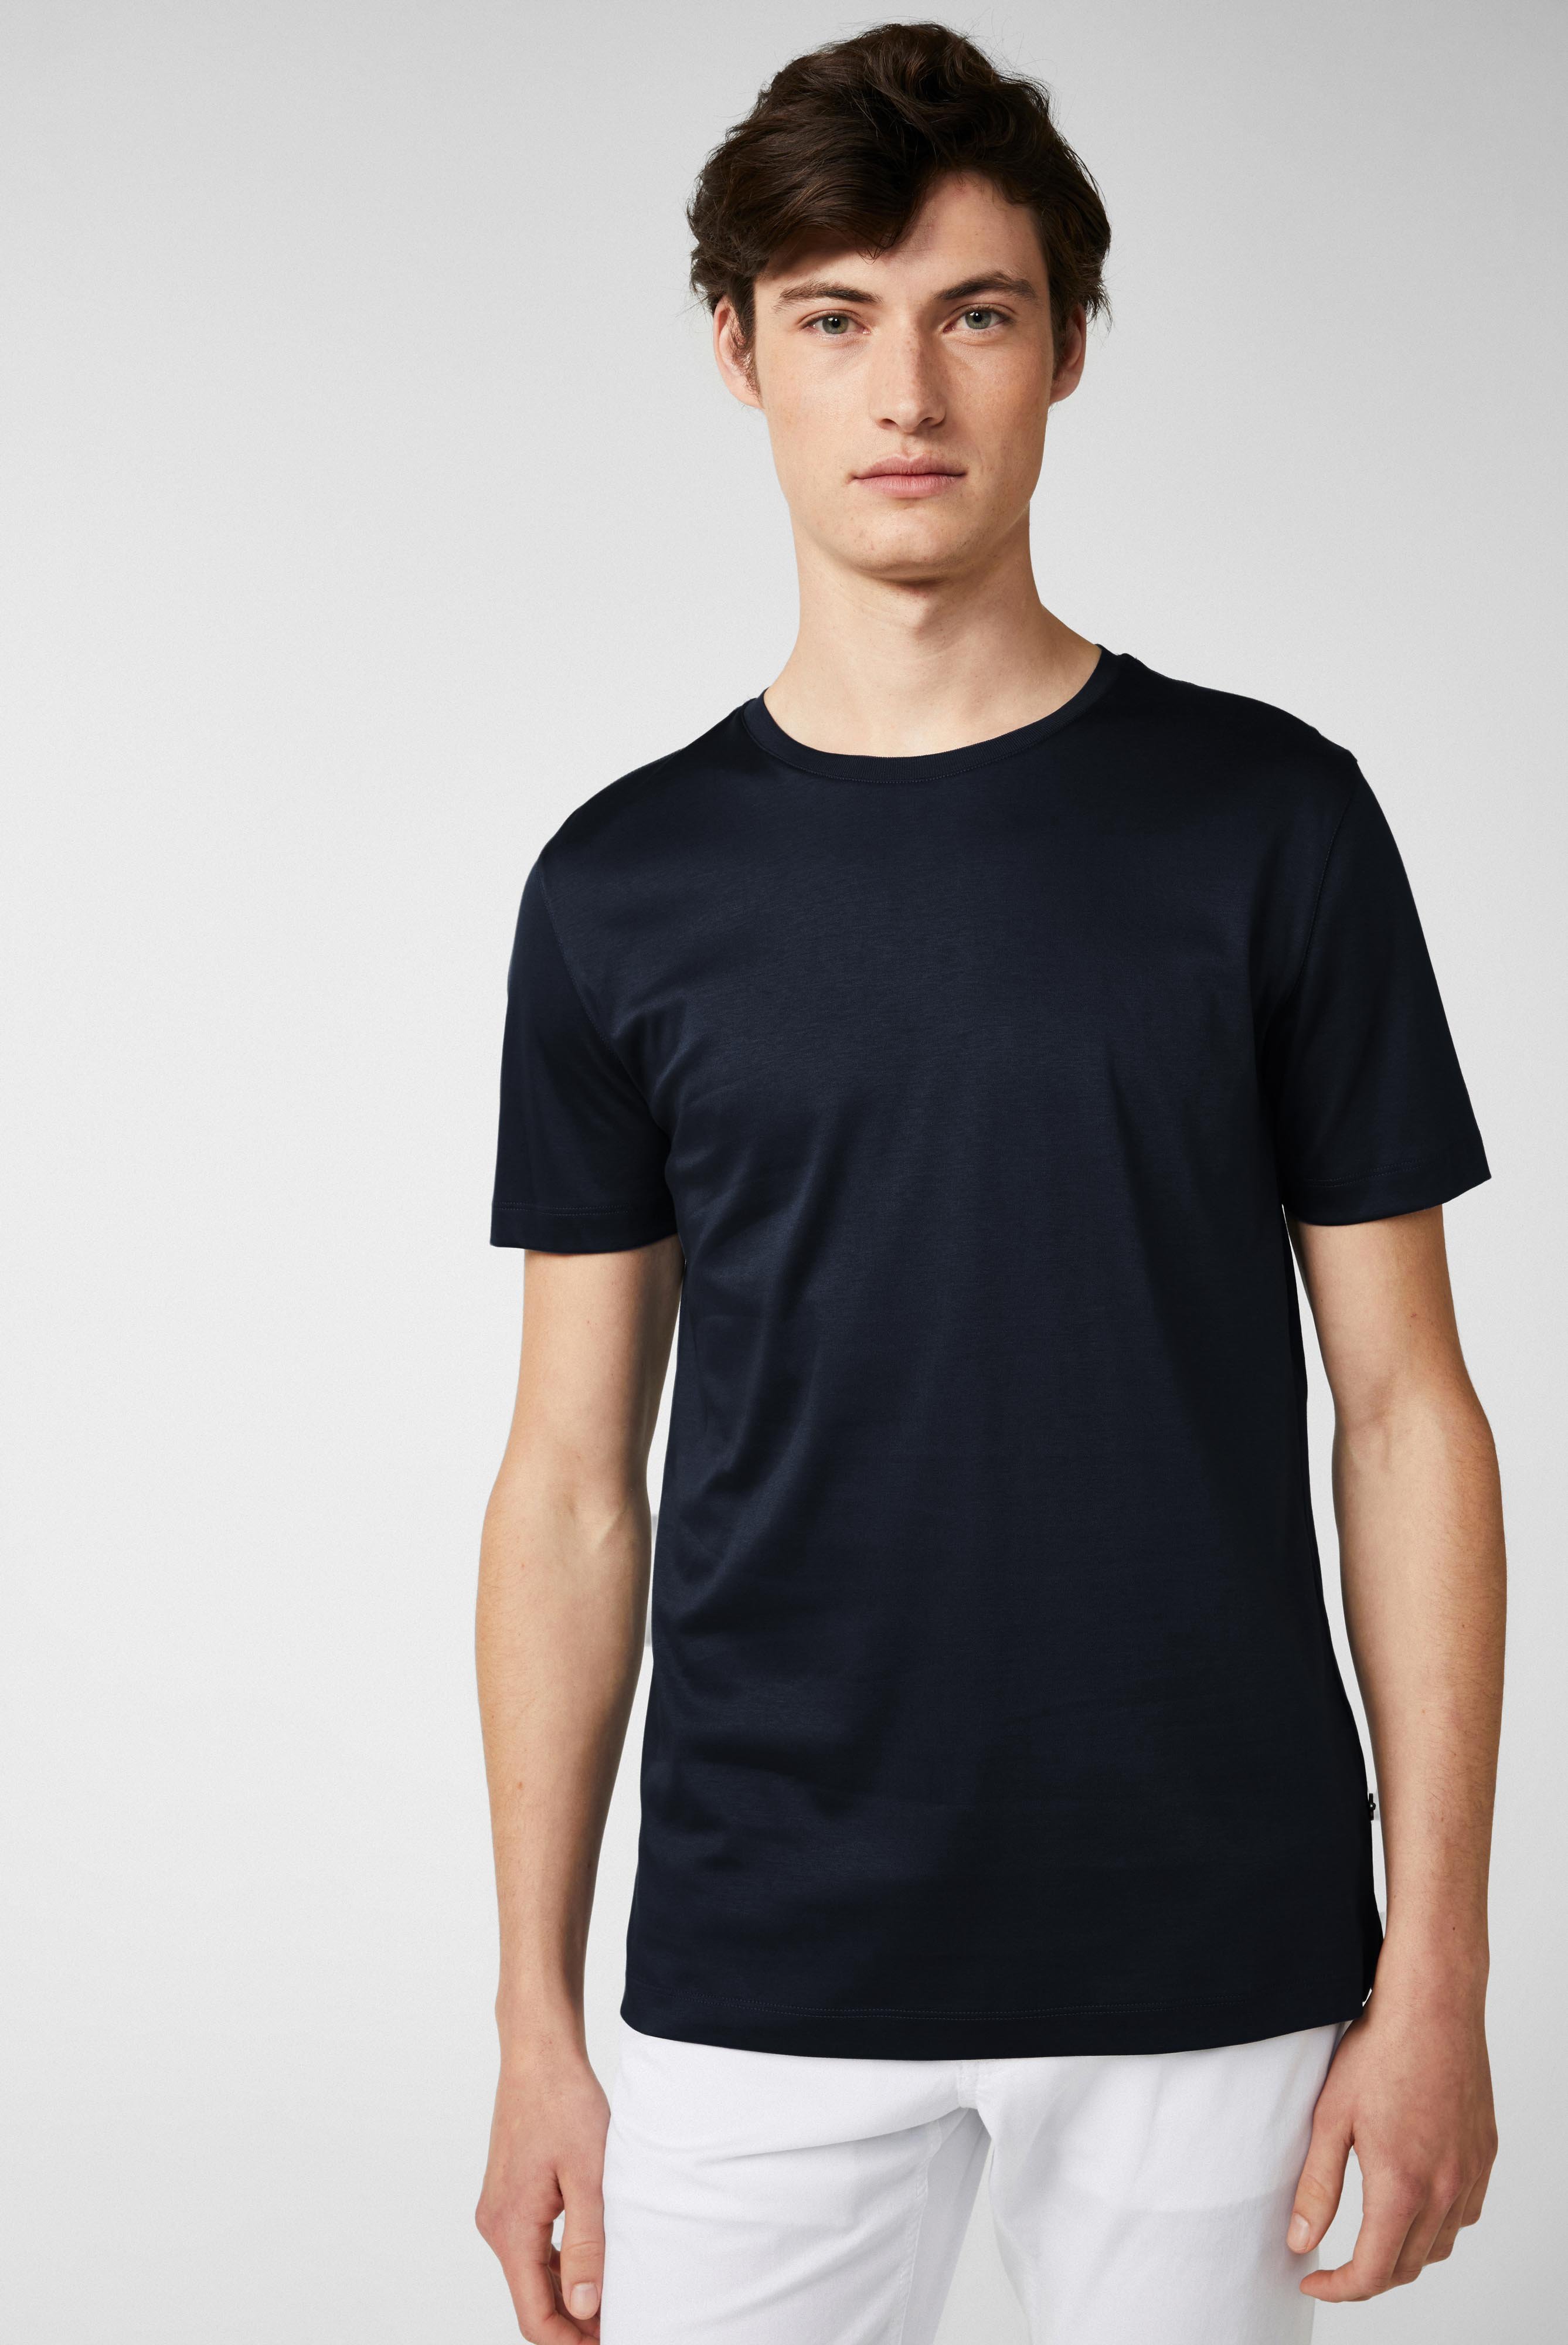 T-Shirts+Swiss Cotton Jersey Crew Neck T-Shirt+20.1717.UX.180031.790.XL